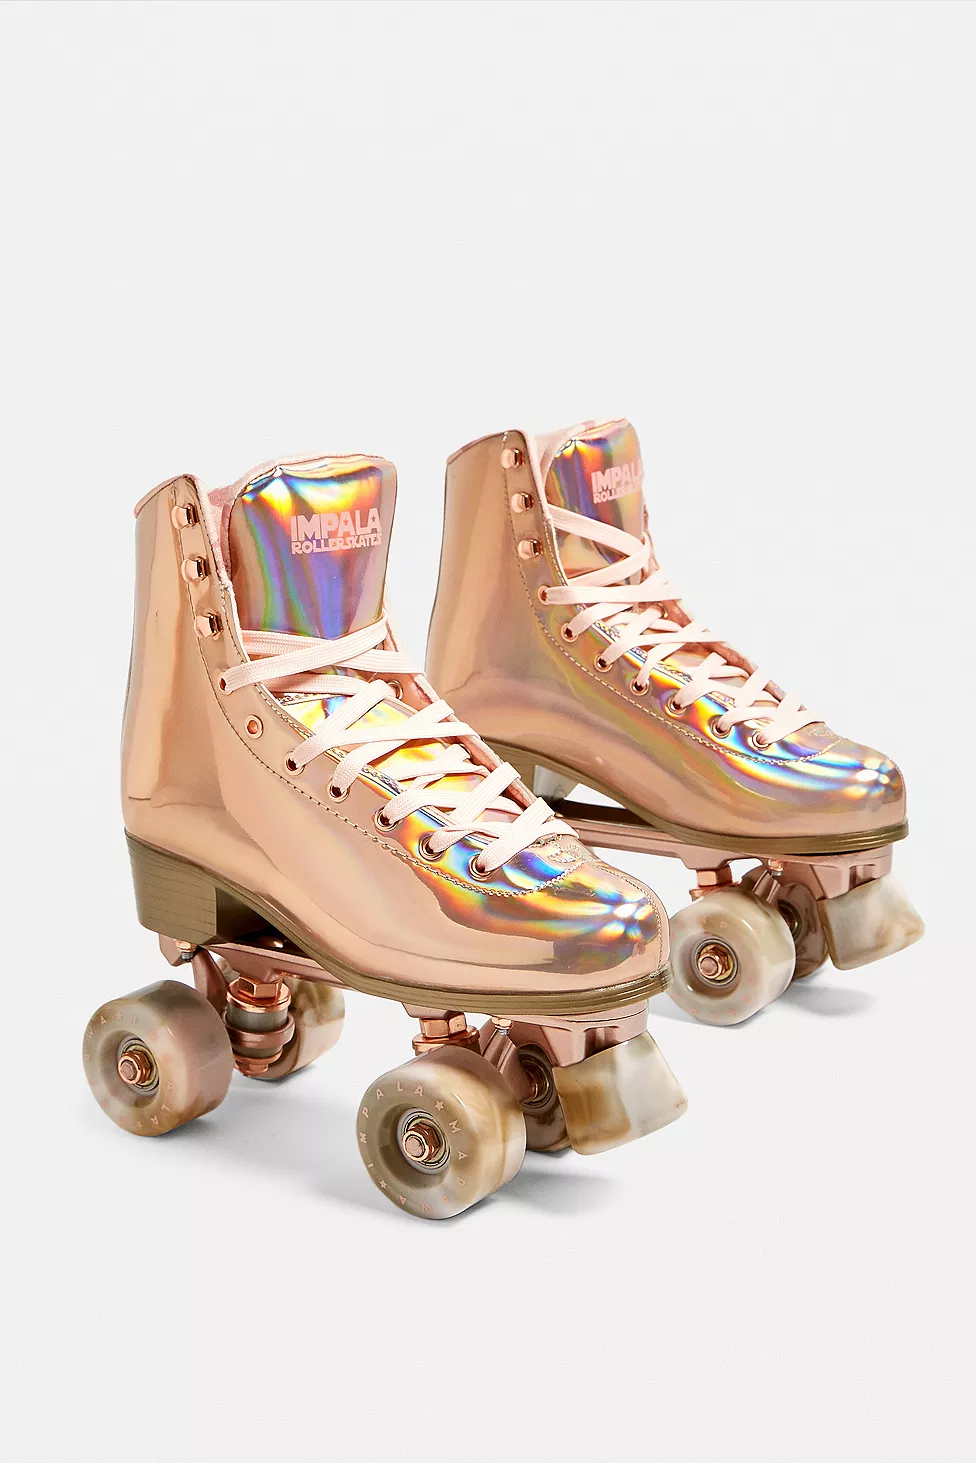 urbanoutfitters.com | Impala Roller Skates